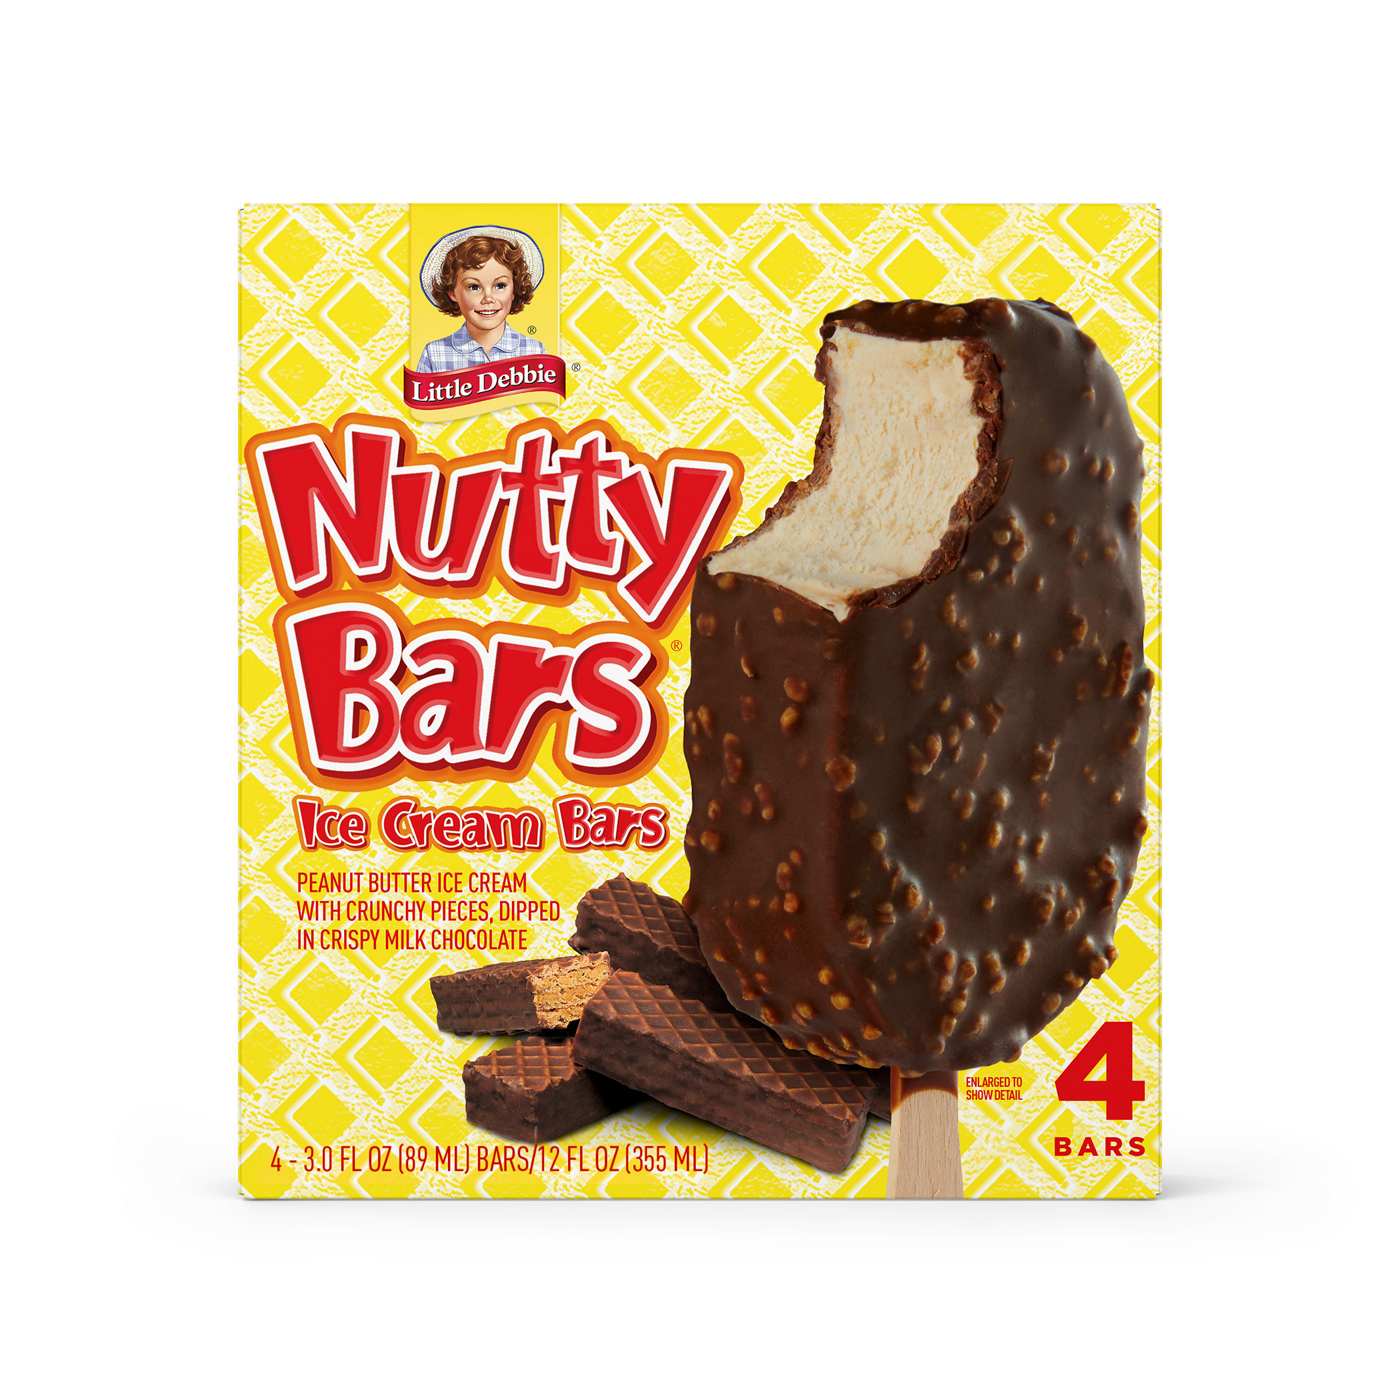 Little Debbie Nutty Bars Ice Cream Bars; image 3 of 3